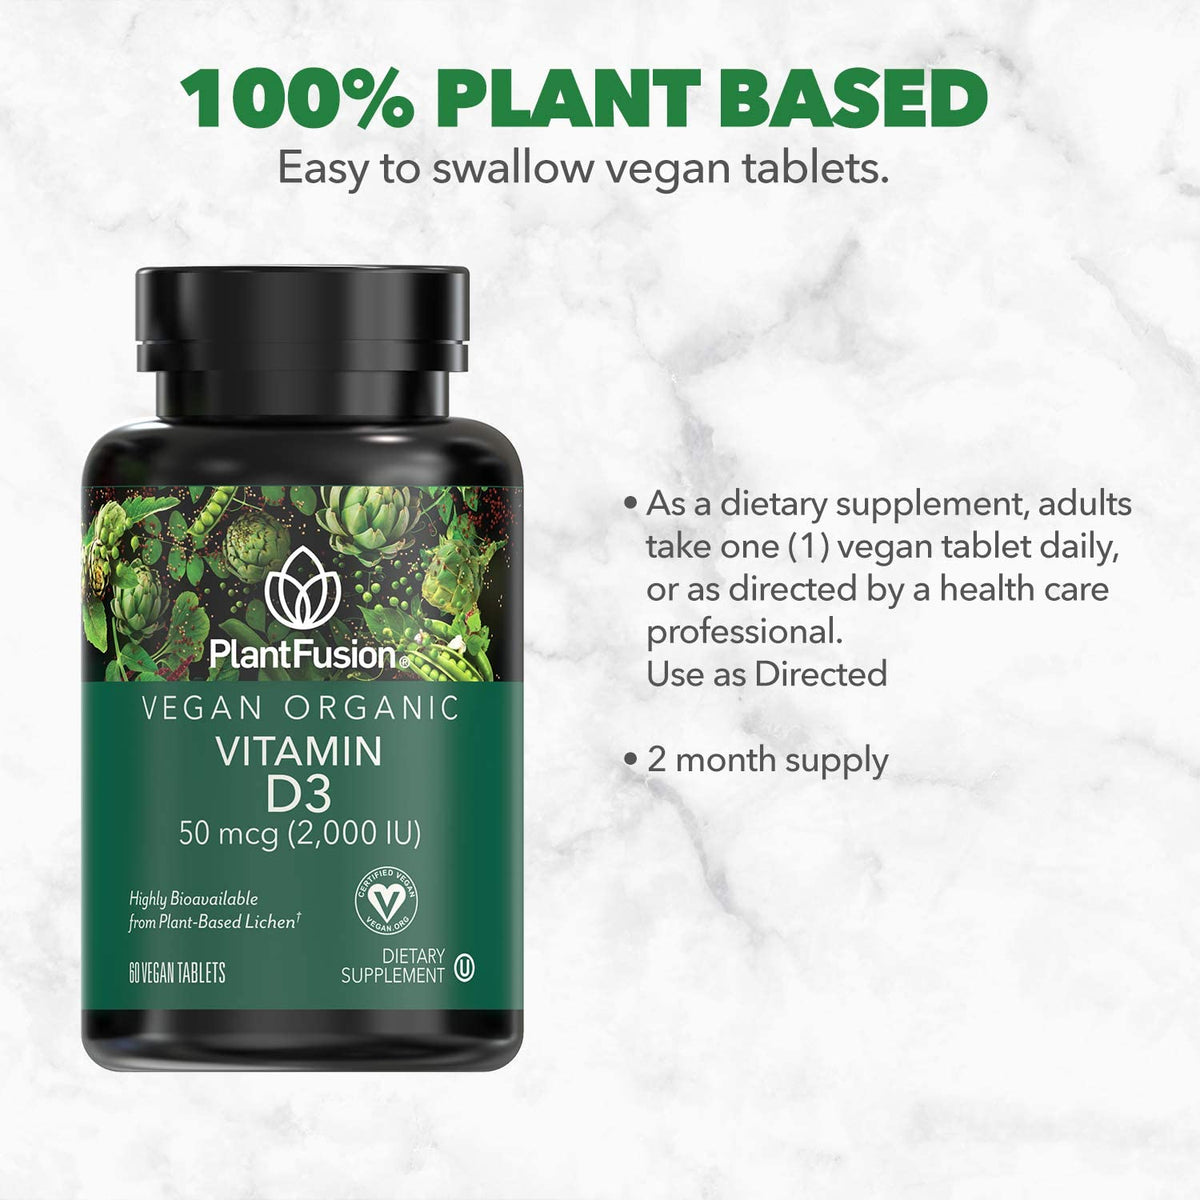 Vegan Organic Vitamin D3